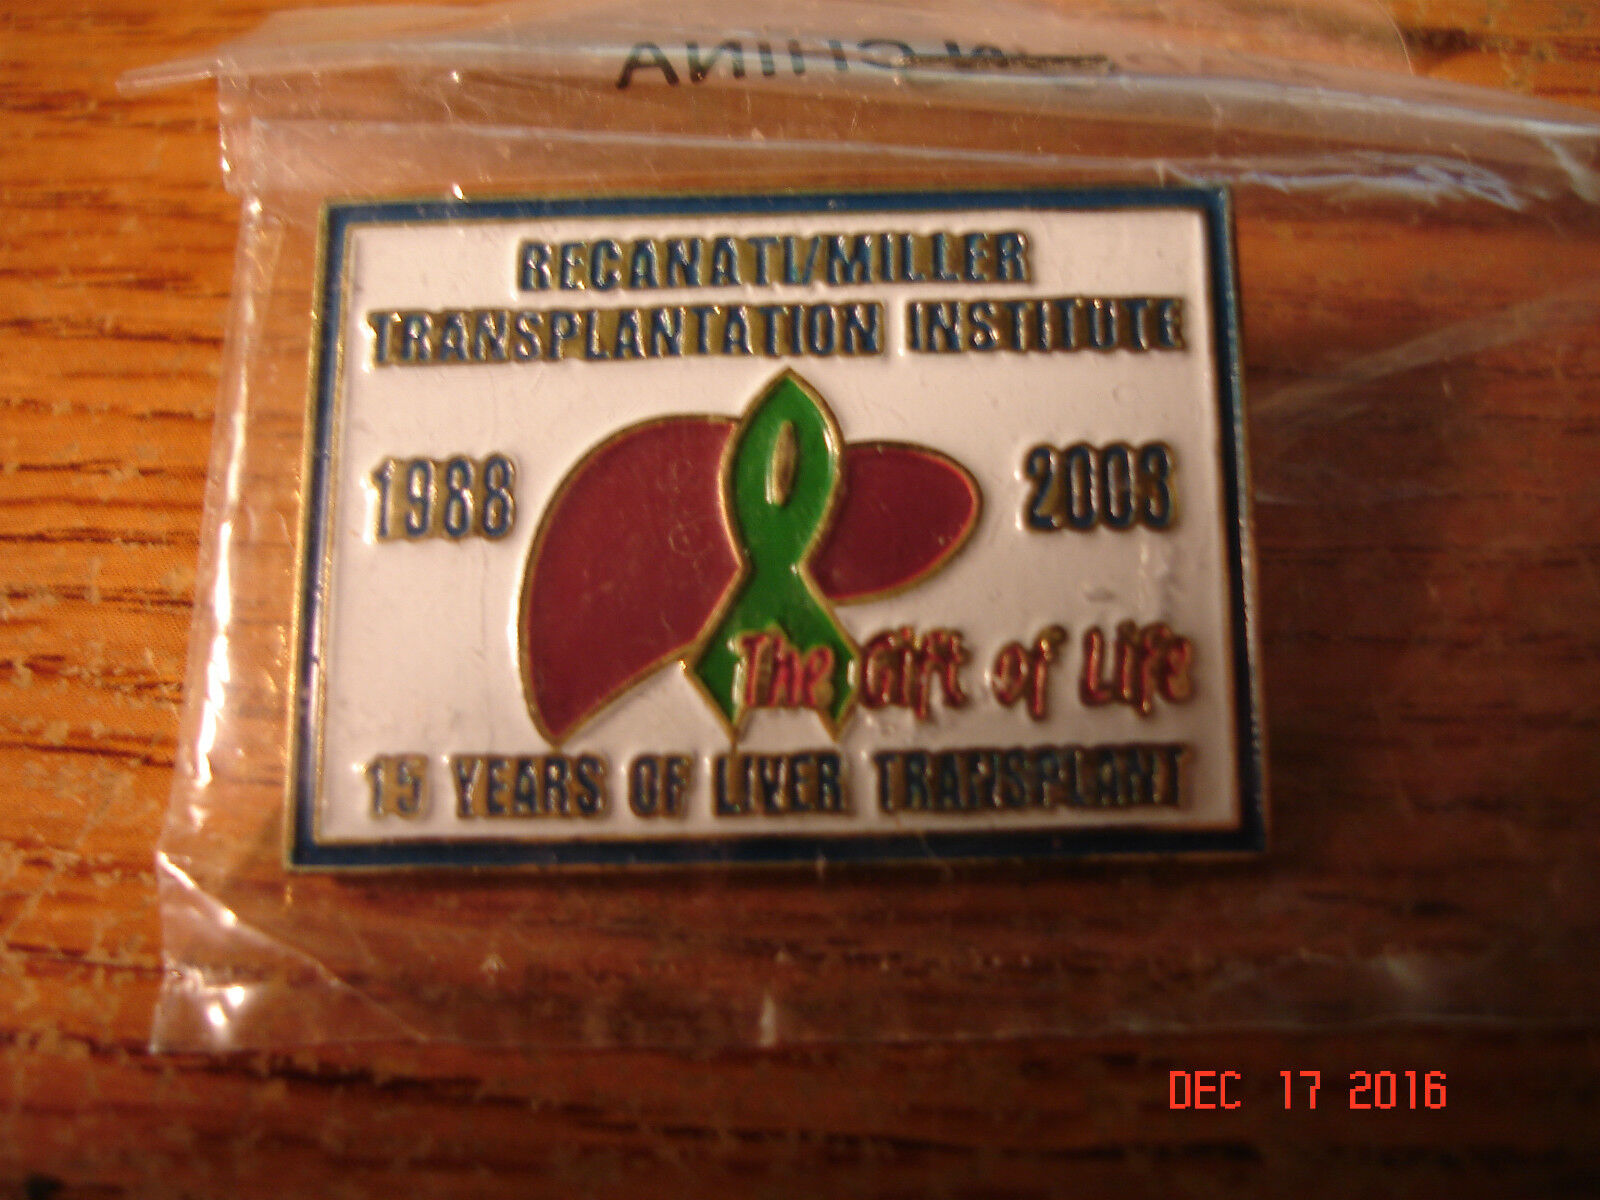 Recanati/Miller Transplantation Institute 15 Years Of Liver Transplant Lapel Pin